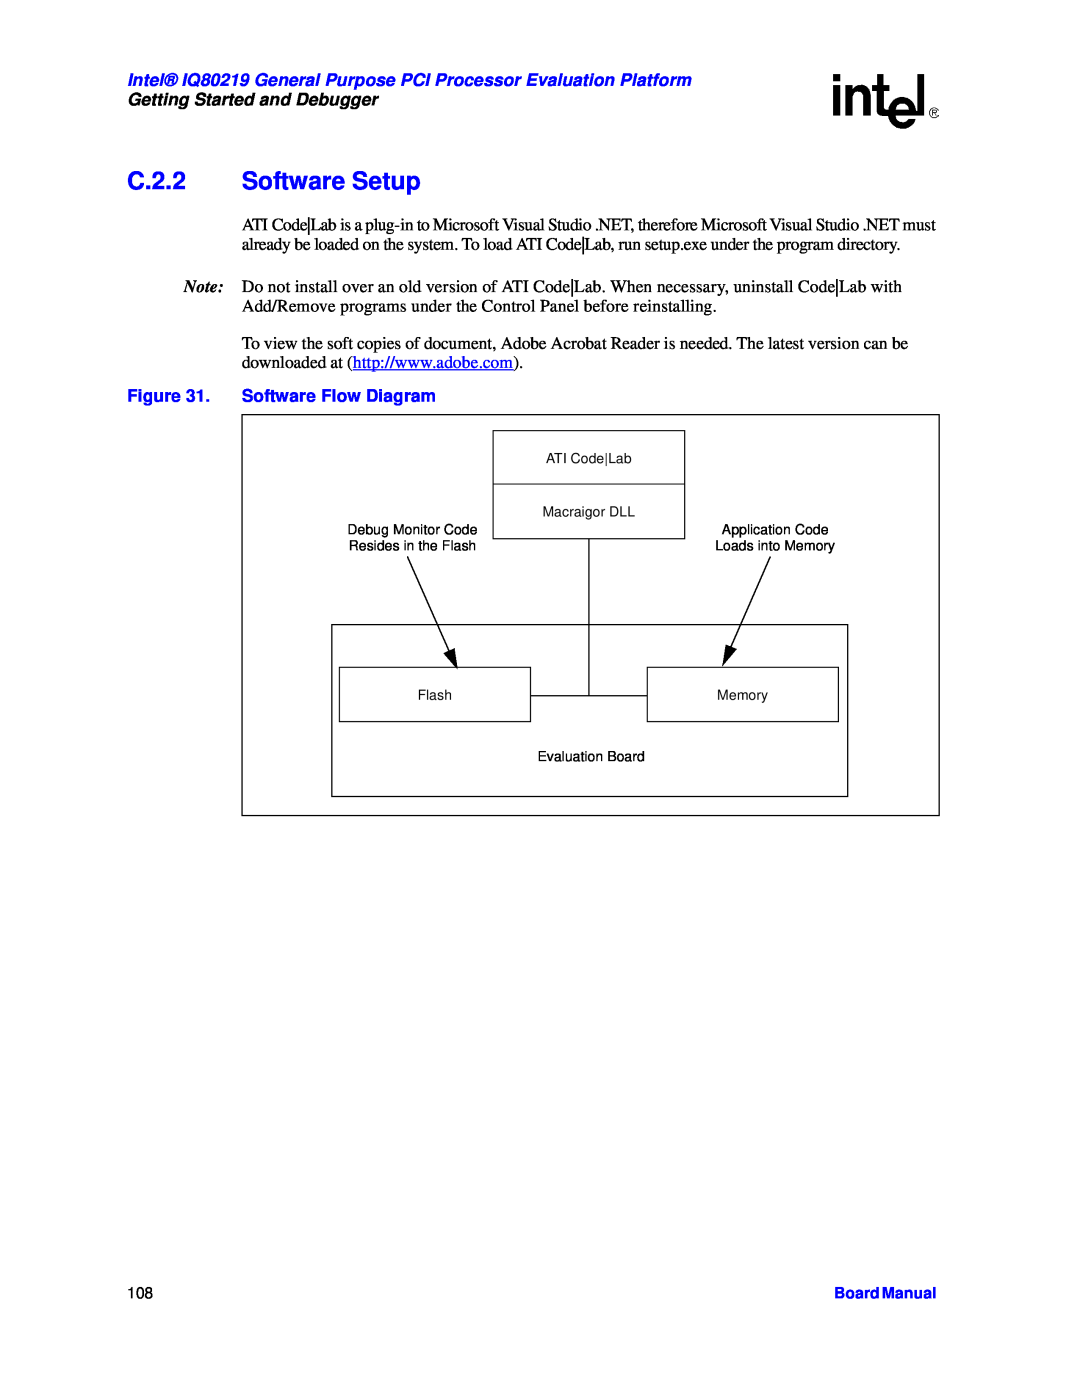 Intel C.2.2 Software Setup, Software Flow Diagram, Intel IQ80219 General Purpose PCI Processor Evaluation Platform 